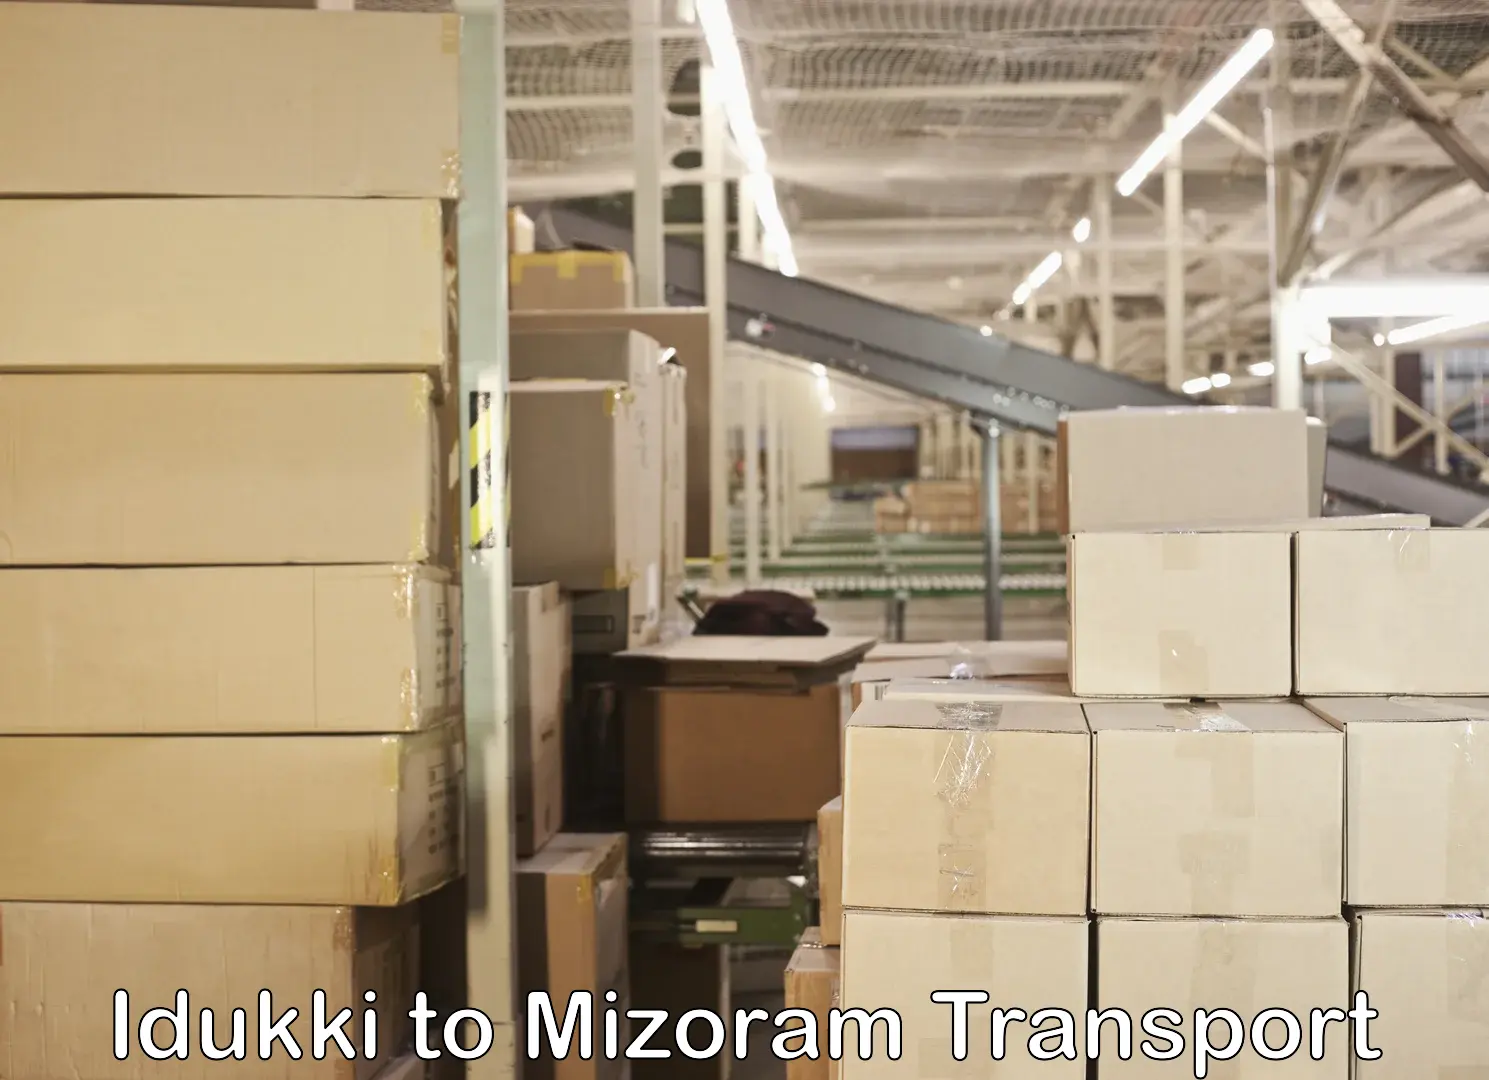 Delivery service Idukki to Mizoram